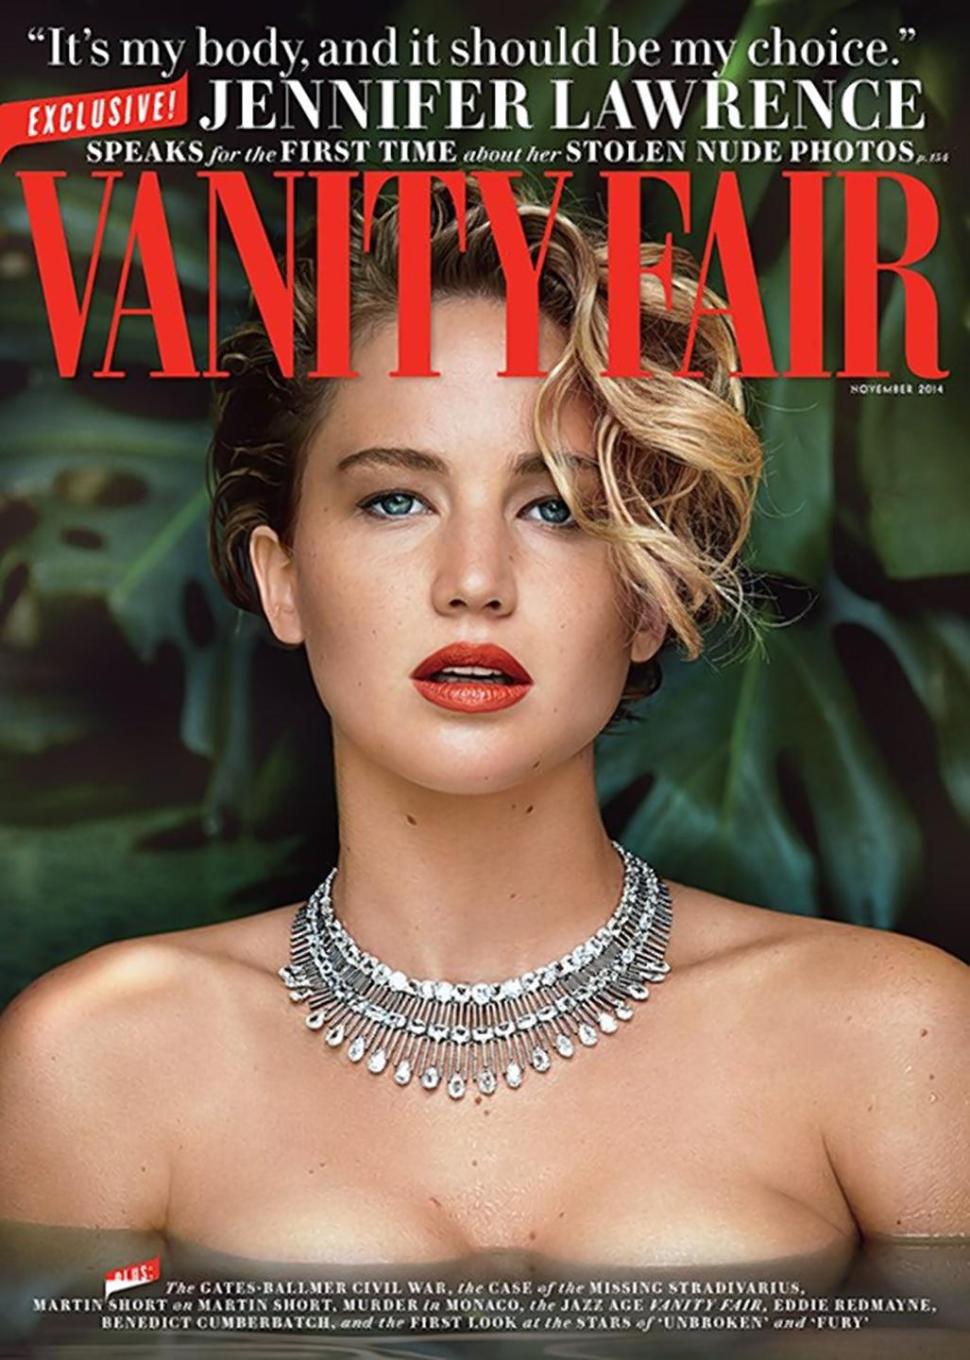 Cover girl Jennifer Lawrence unloads on photo hacking in the November Vanity Fair.